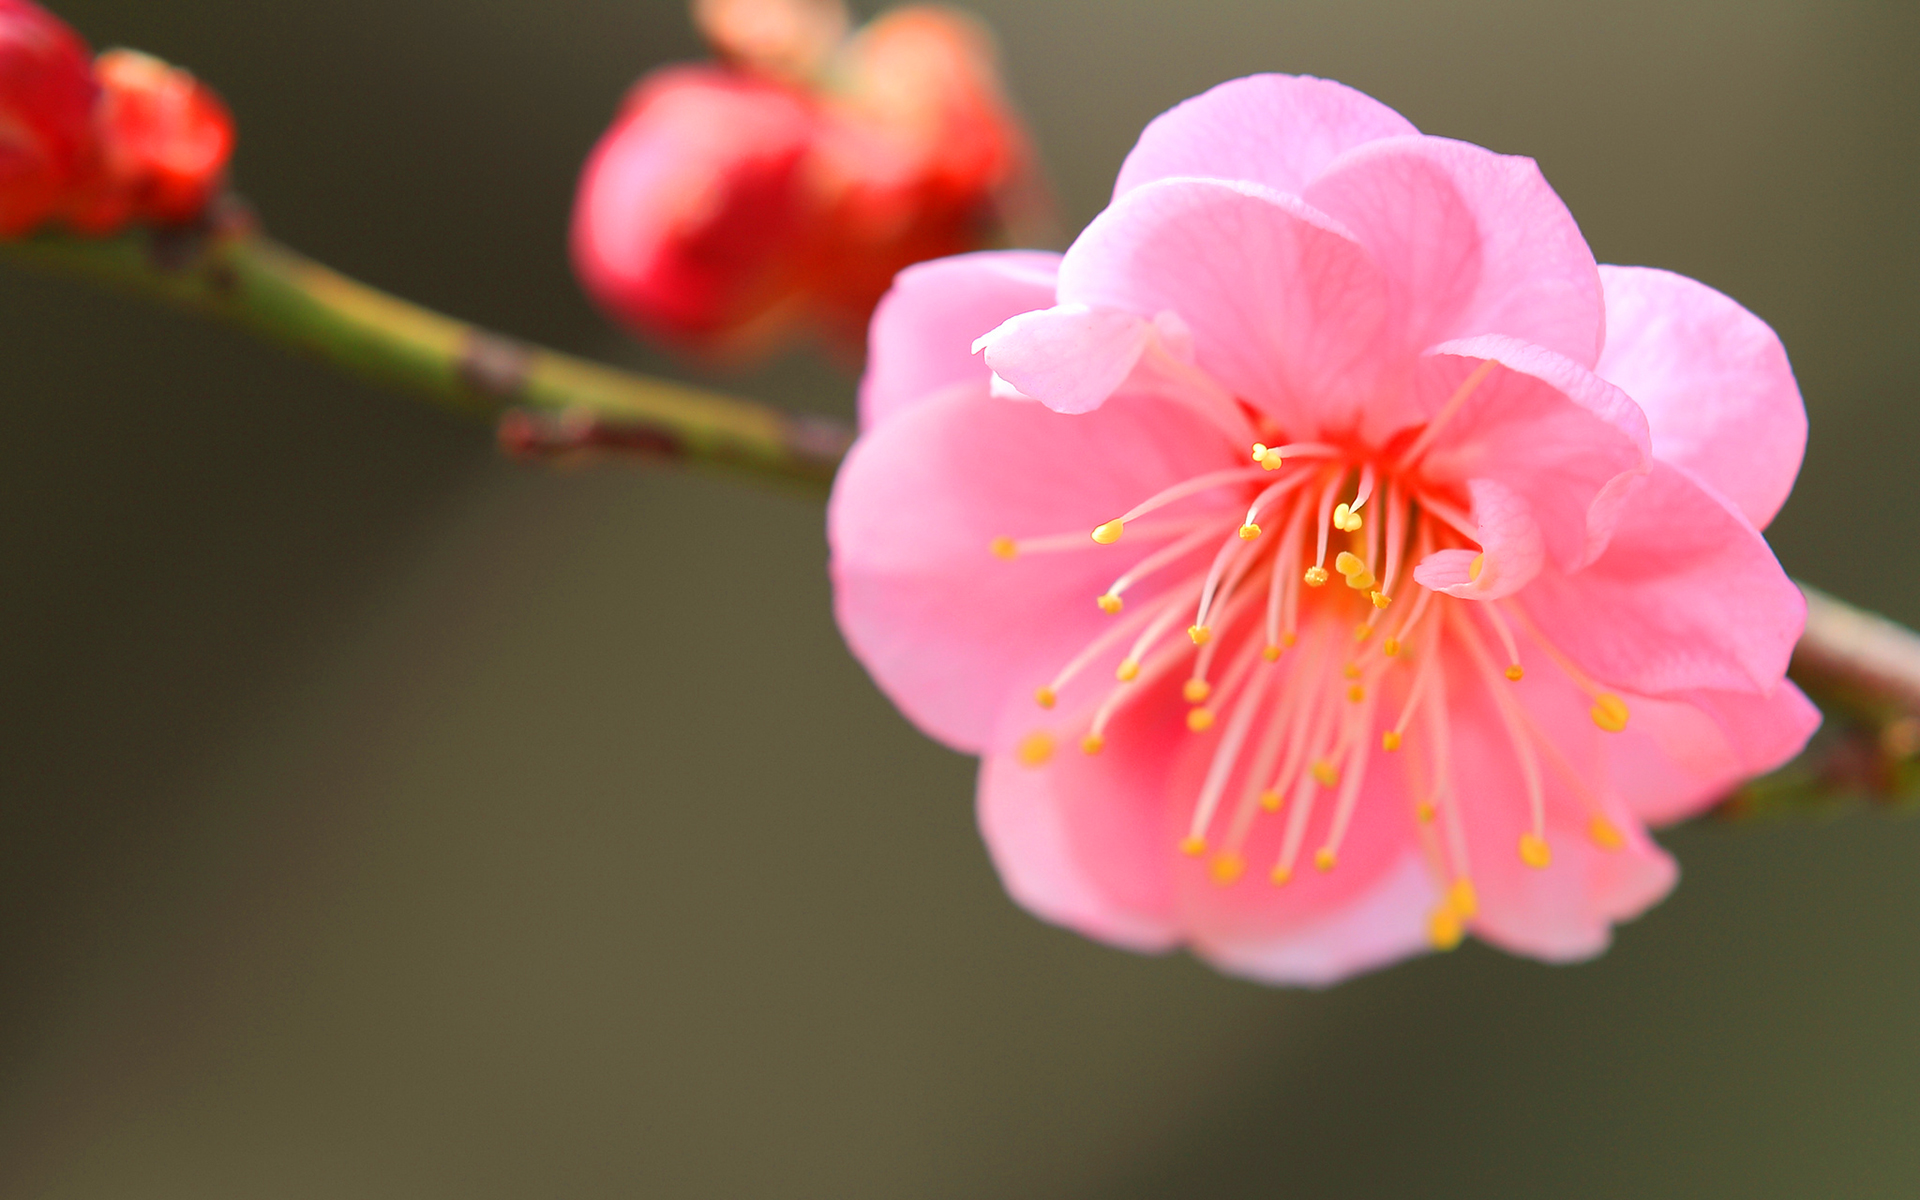 aprikosentapete,blume,blütenblatt,rosa,pflanze,blühen